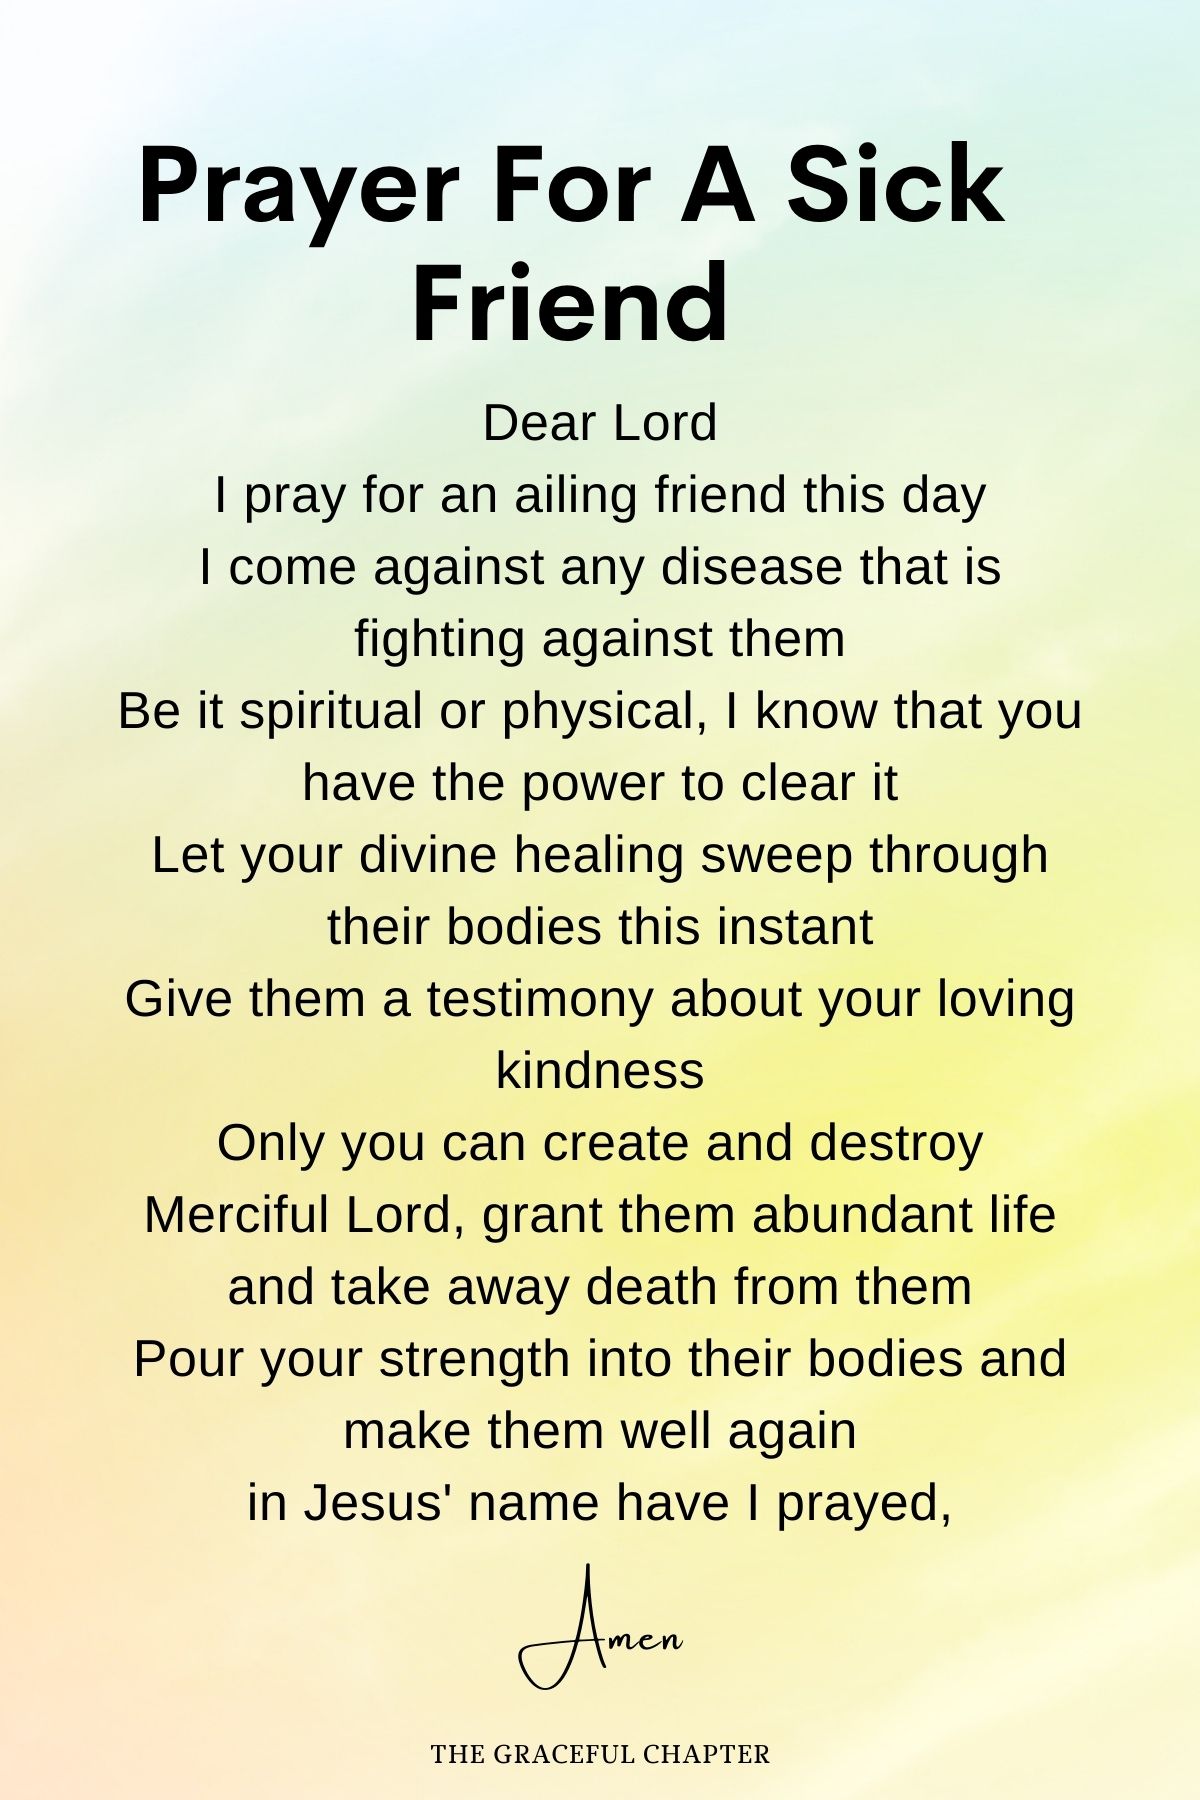 Prayer for a sick friend prayers for friends